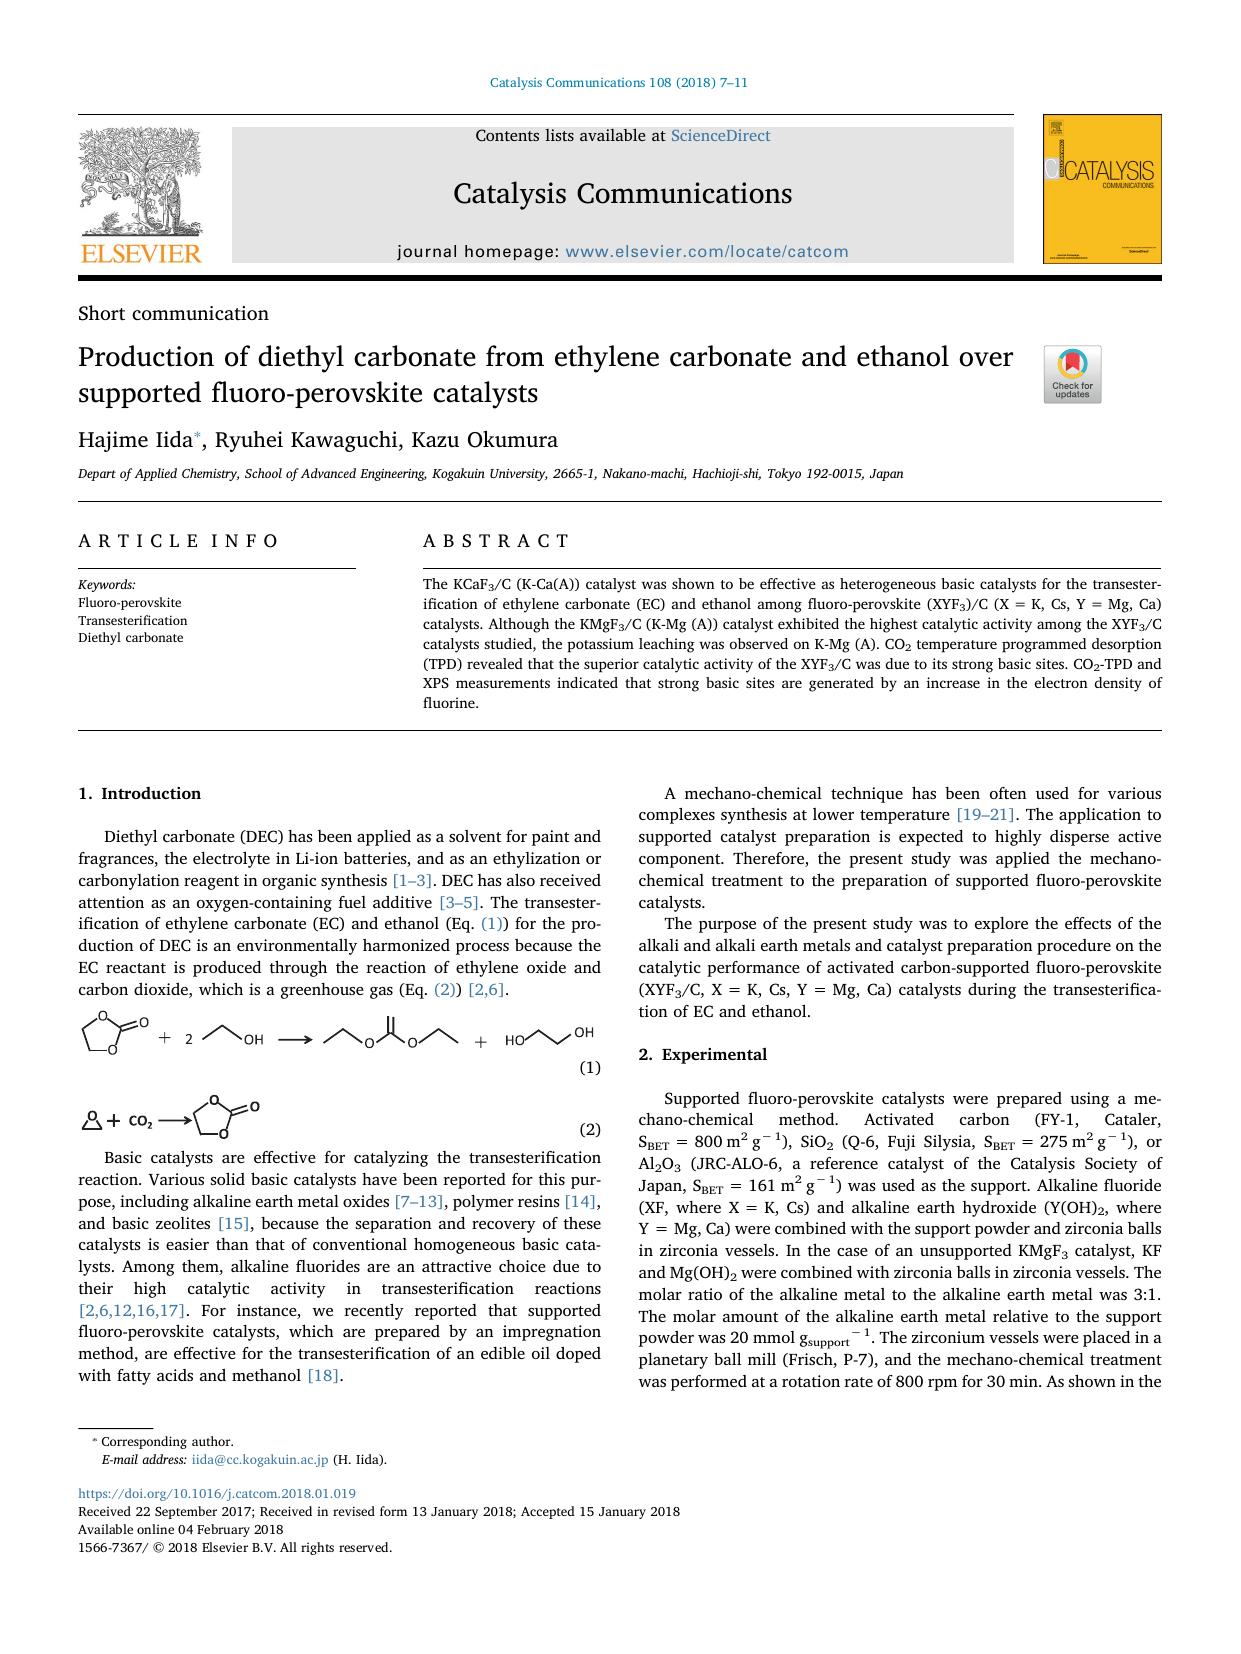 Production of diethyl carbonate from ethylene carbonate and ethanol over supported fluoro-perovskite catalysts by Hajime Iida & Ryuhei Kawaguchi & Kazu Okumura